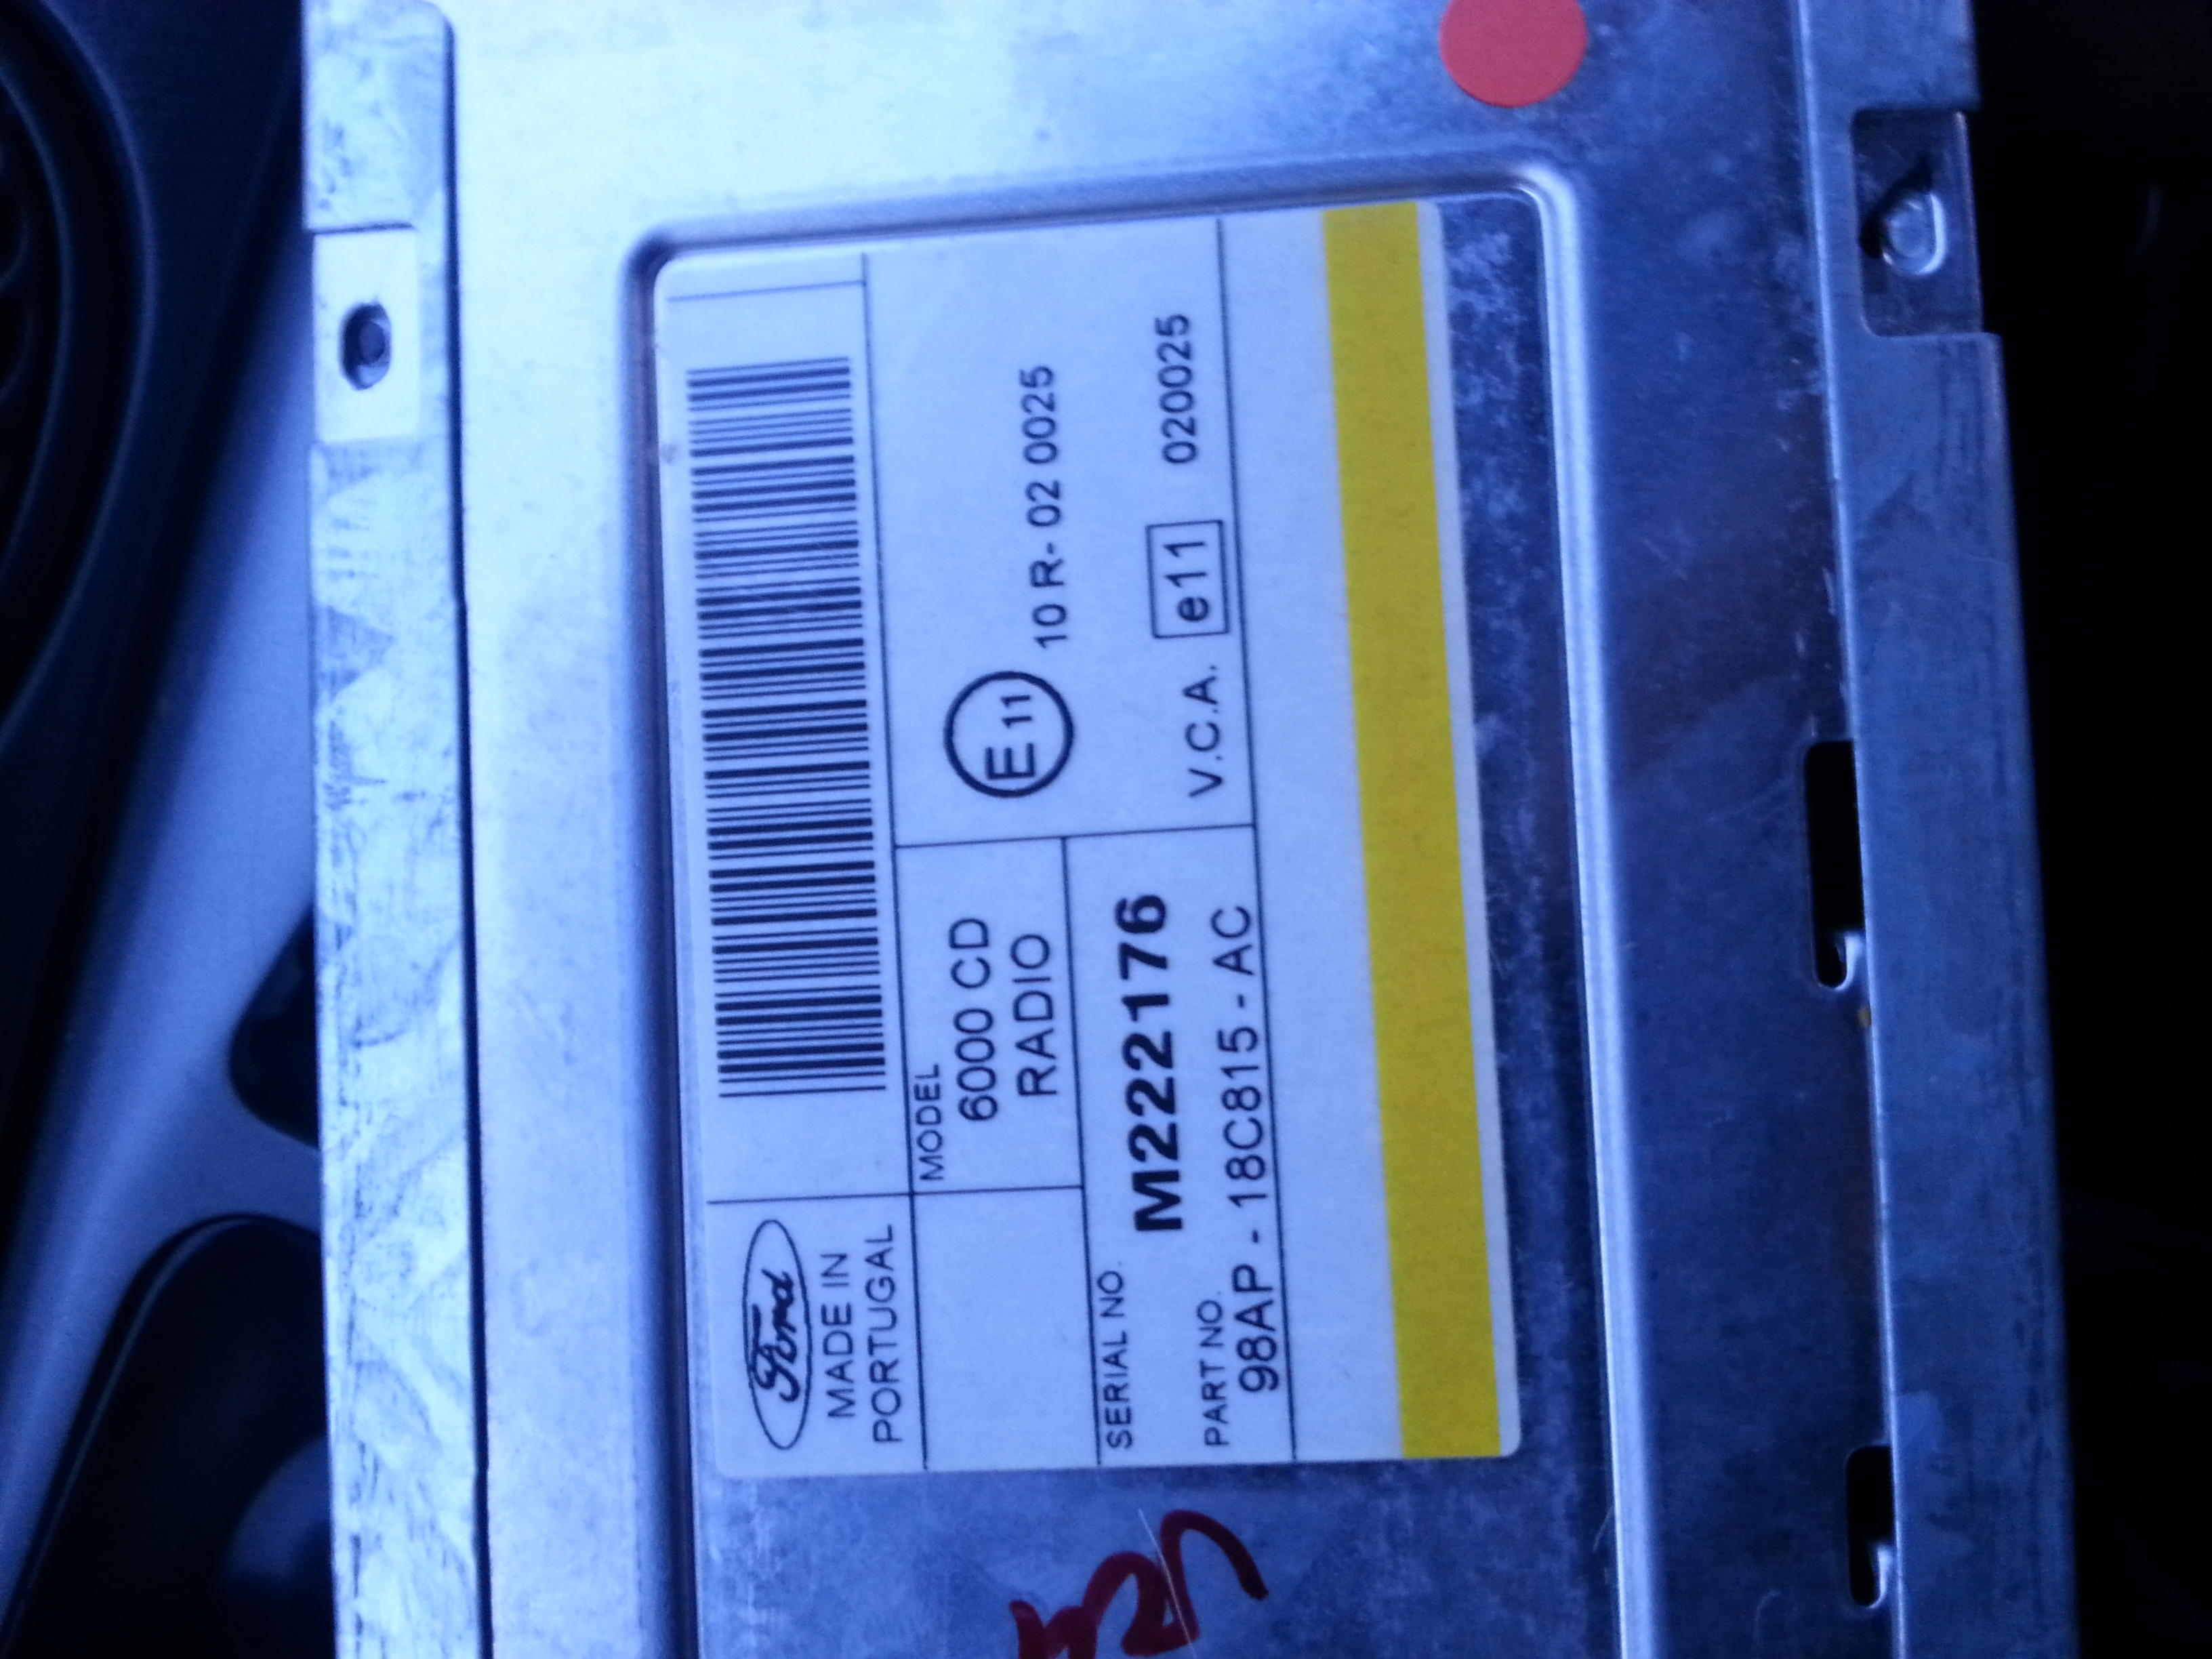 am schimbat bateria la un ford focus si numai stiu codul la casetofon.  serial M222176_ model 6000 cd radio? #100271 - 4Tuning Help